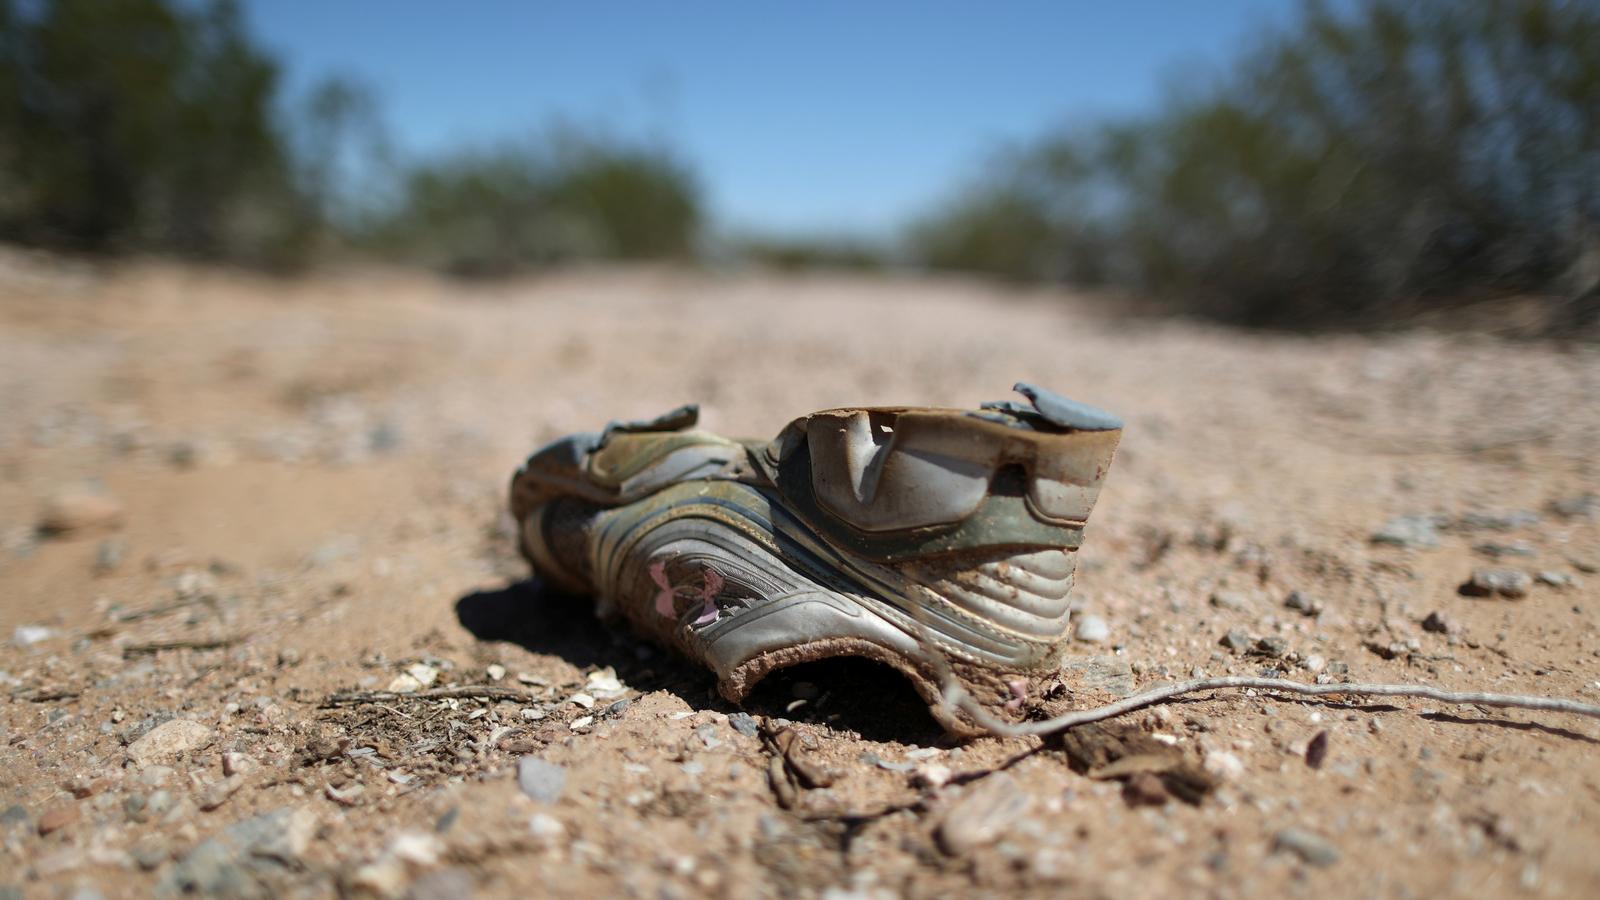 A worn shoe in the desert.